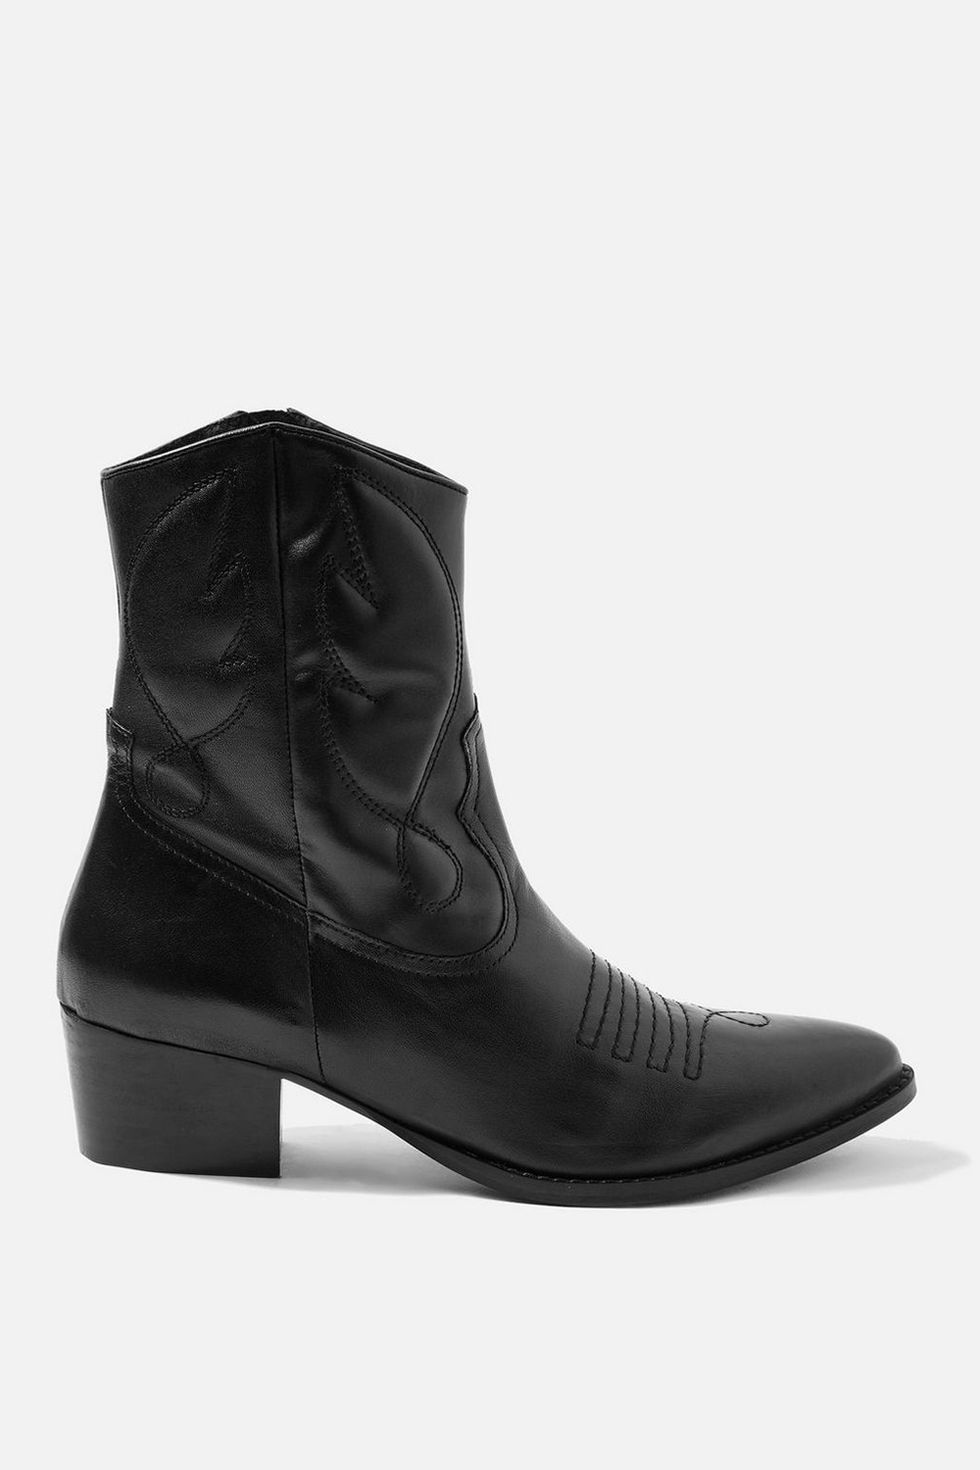 Footwear, Shoe, Black, Boot, Leather, Cowboy boot, Durango boot, 